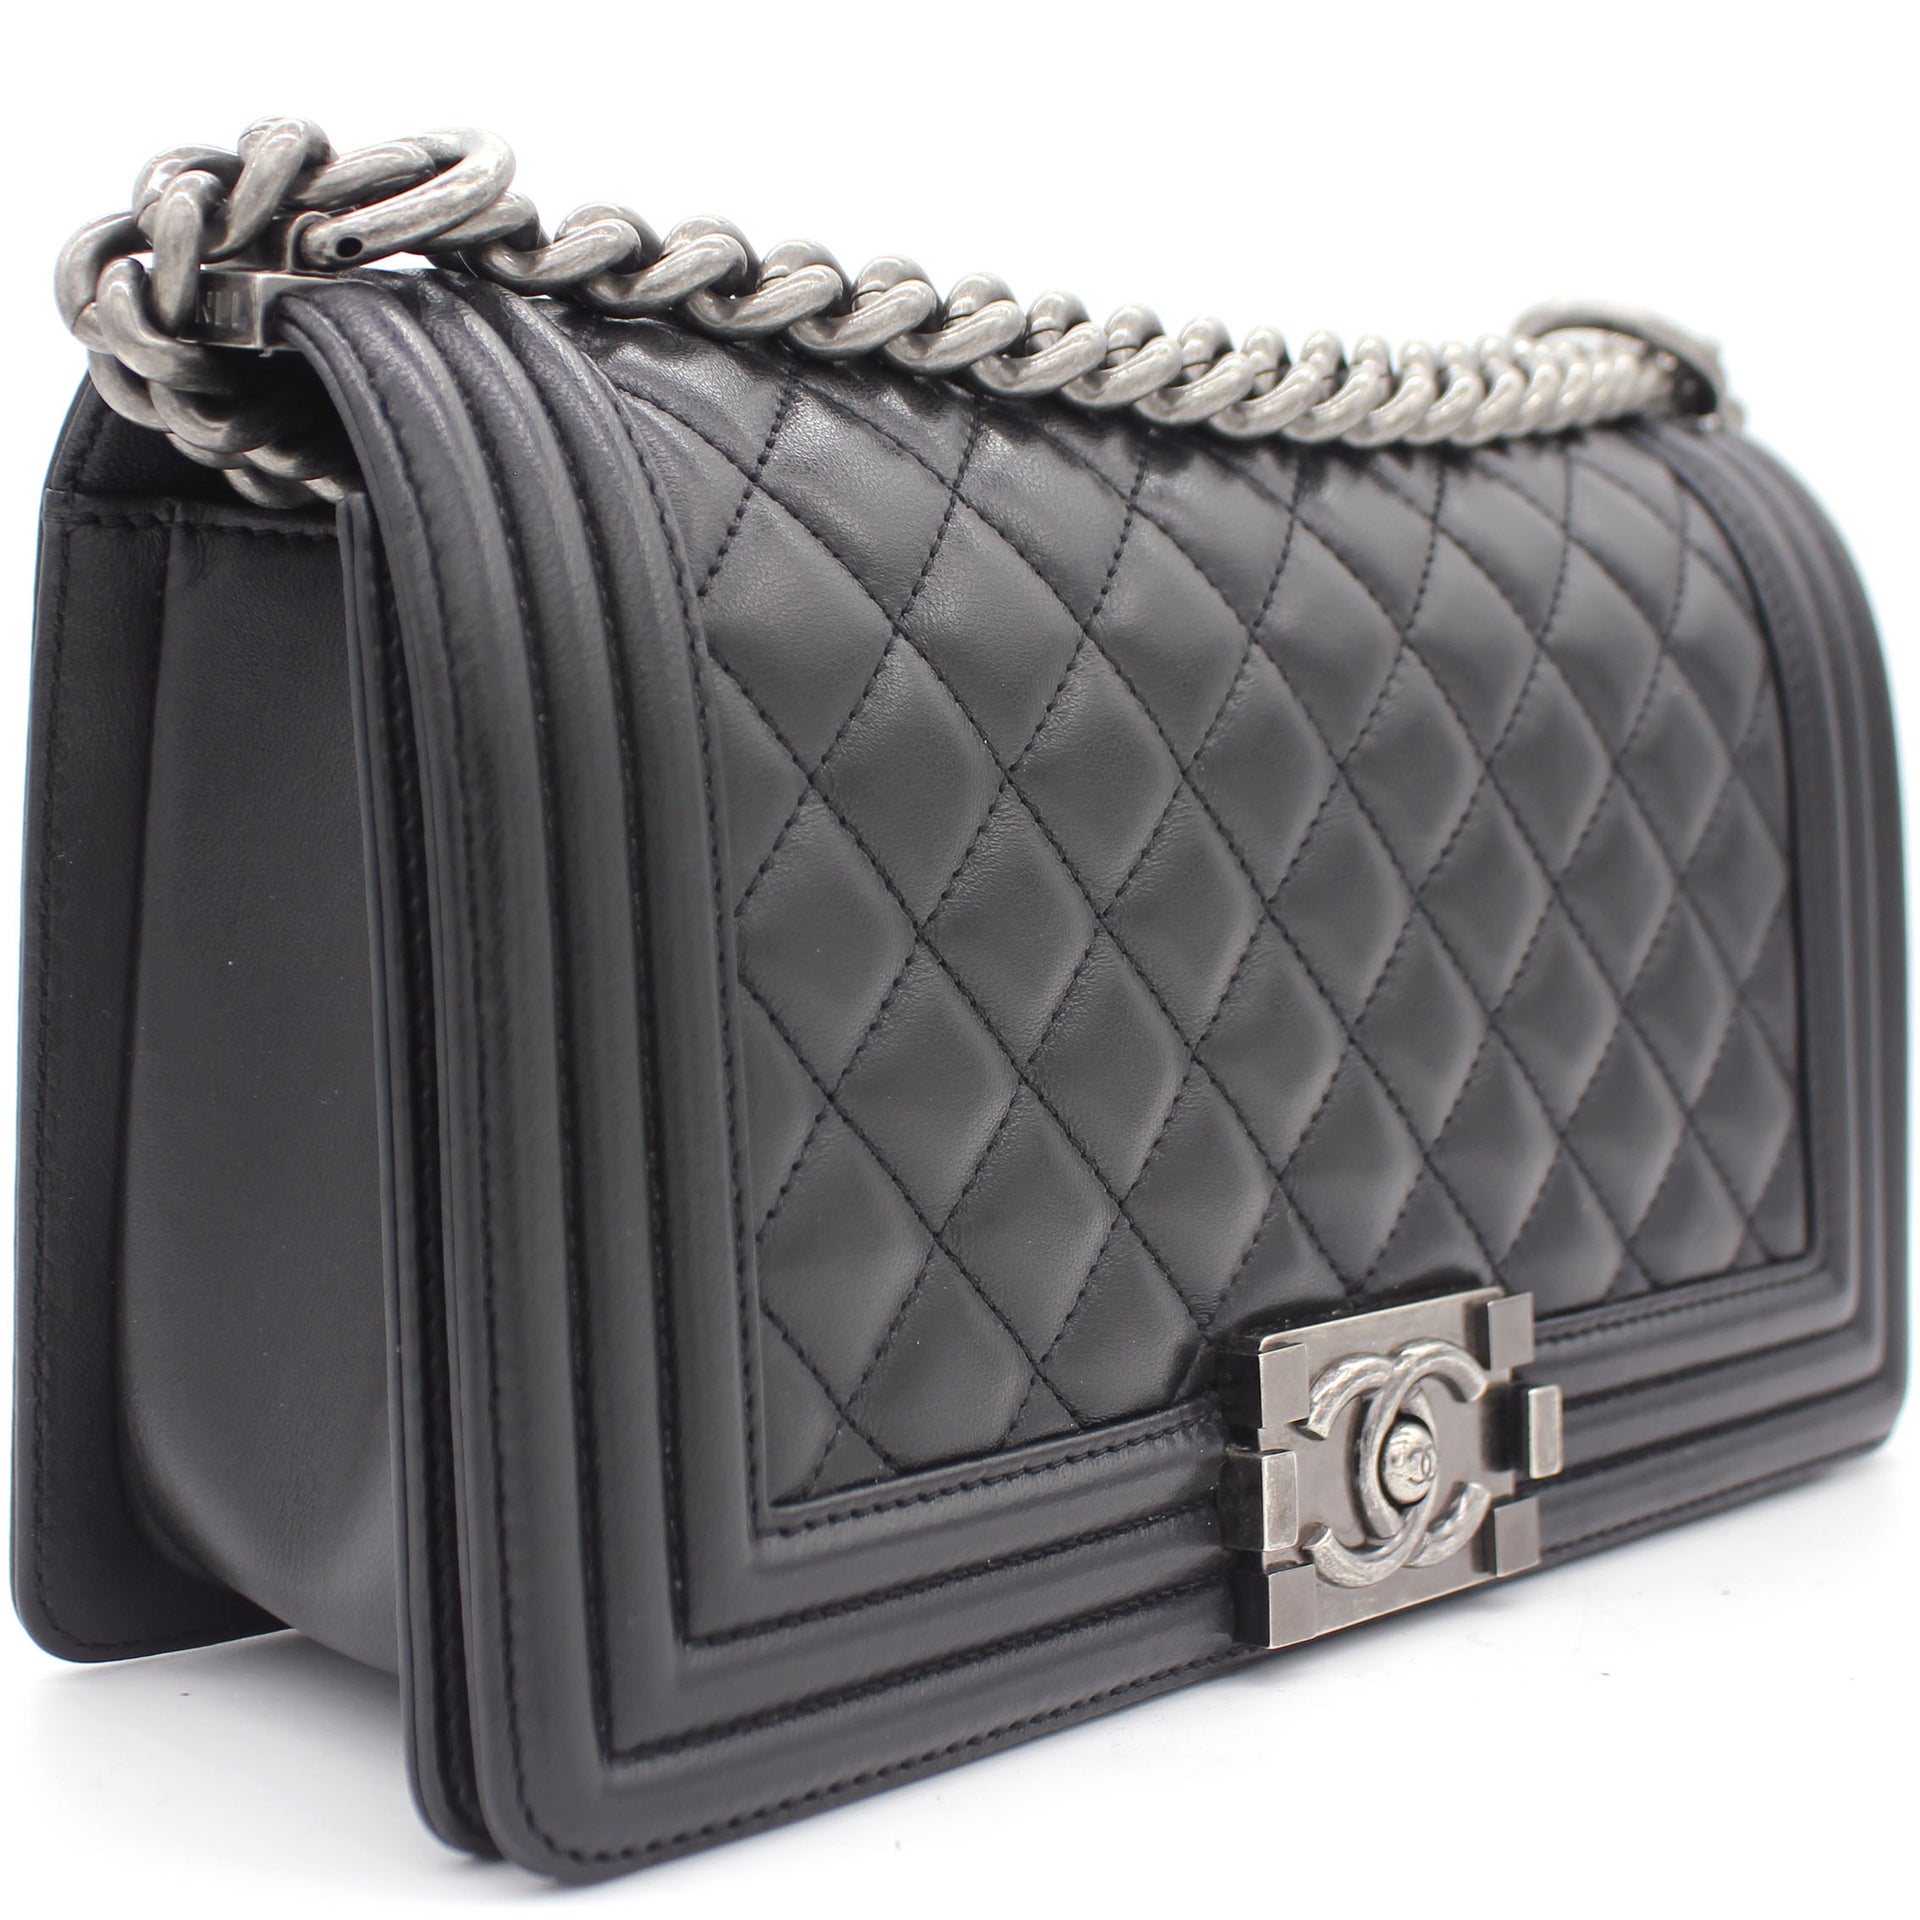 Boy chanel handbag Grained shiny calfskin  goldtone metal black   Fashion  CHANEL